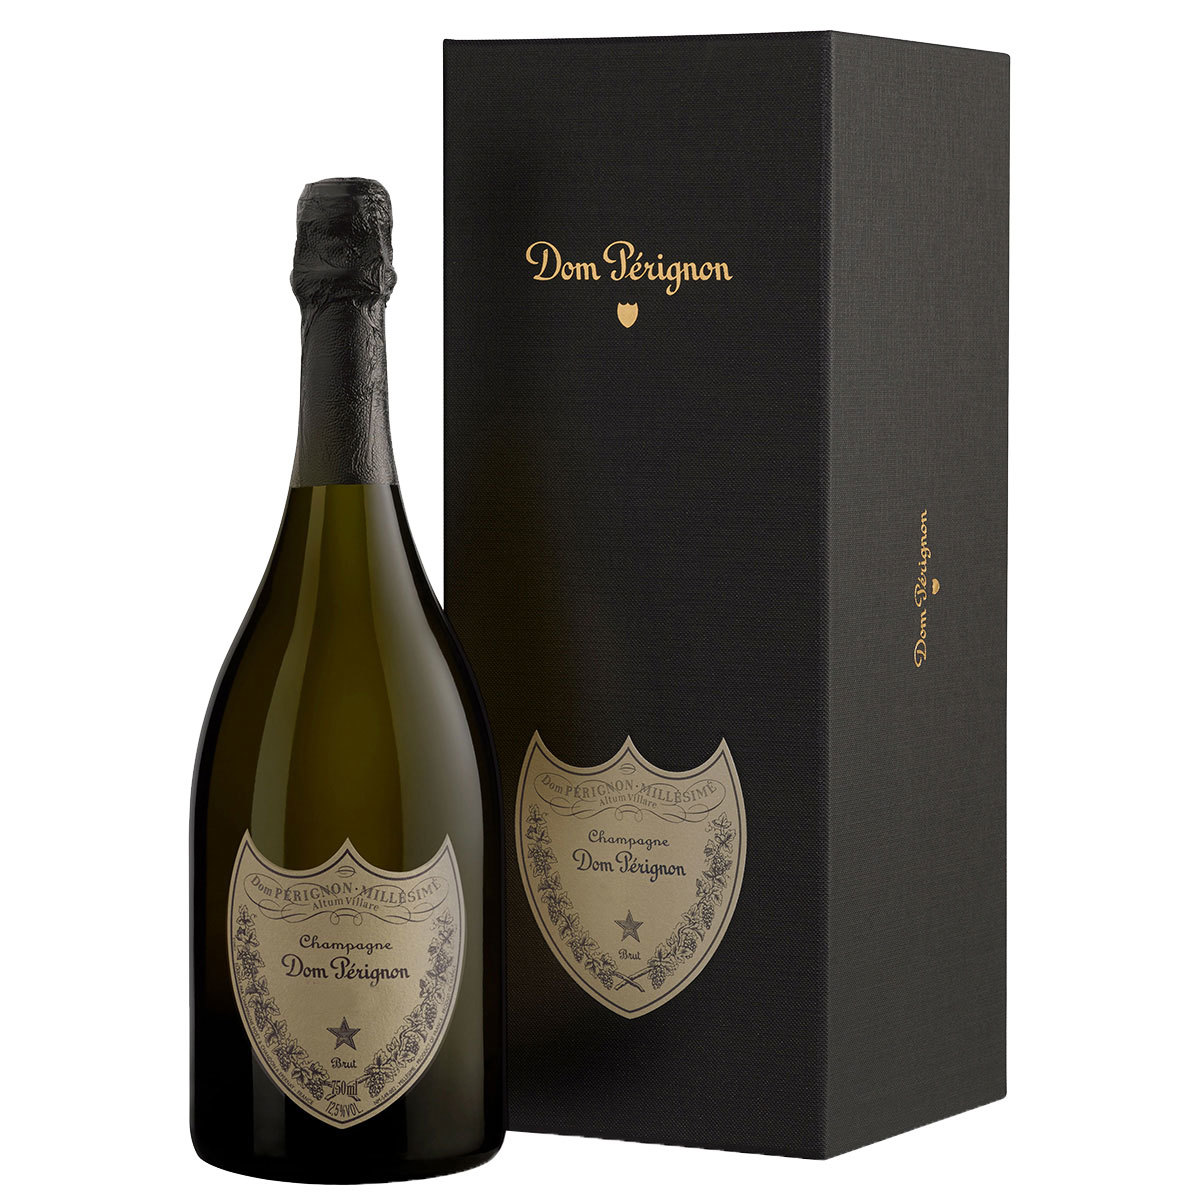 Bottle of Don Perignon